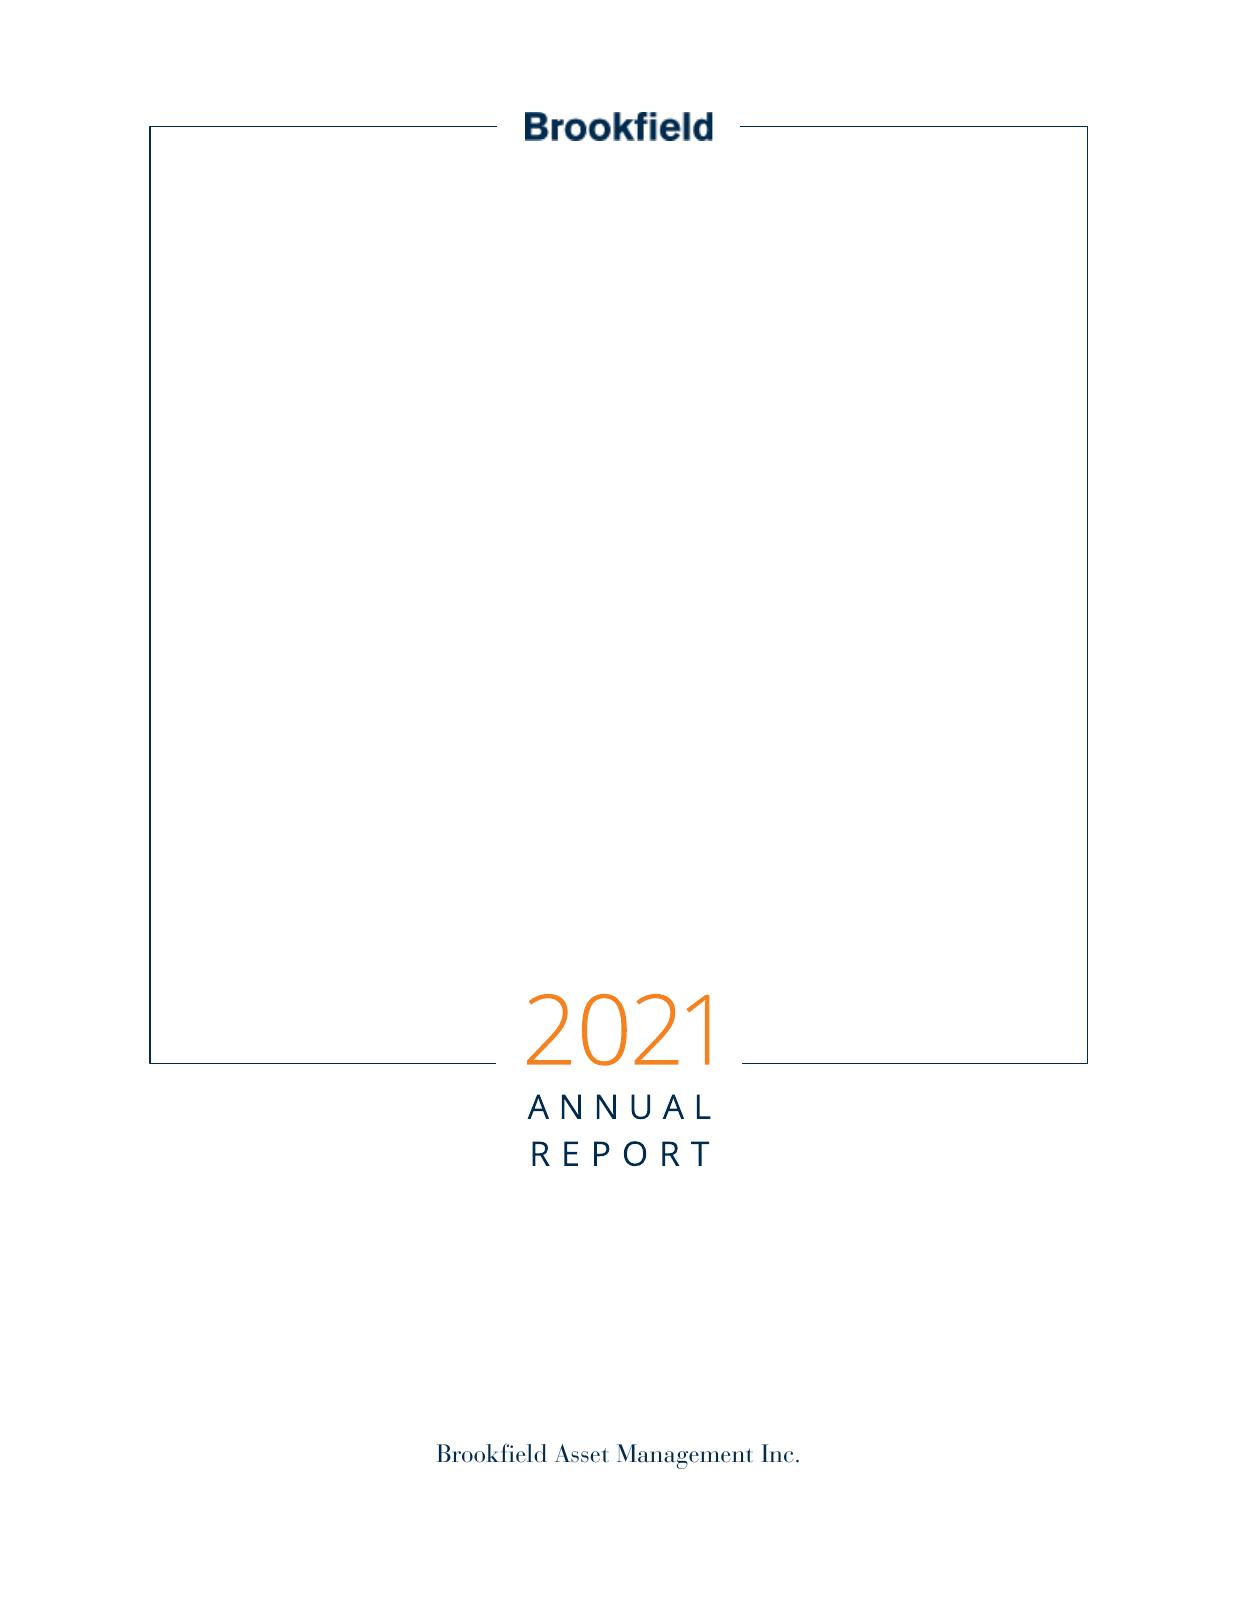 MBFS 2022 Annual Report